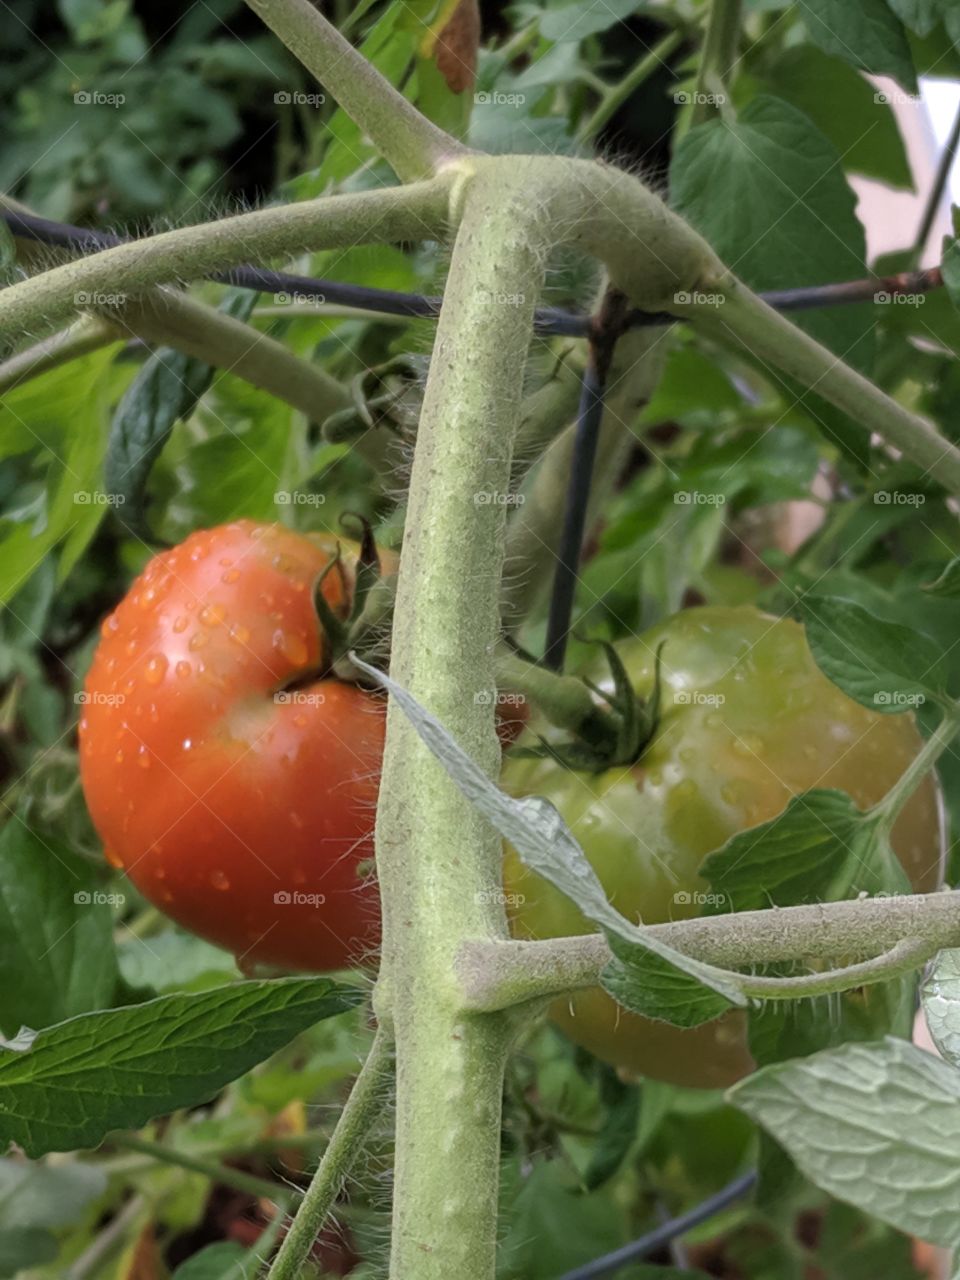 My tomatoes, my pride.